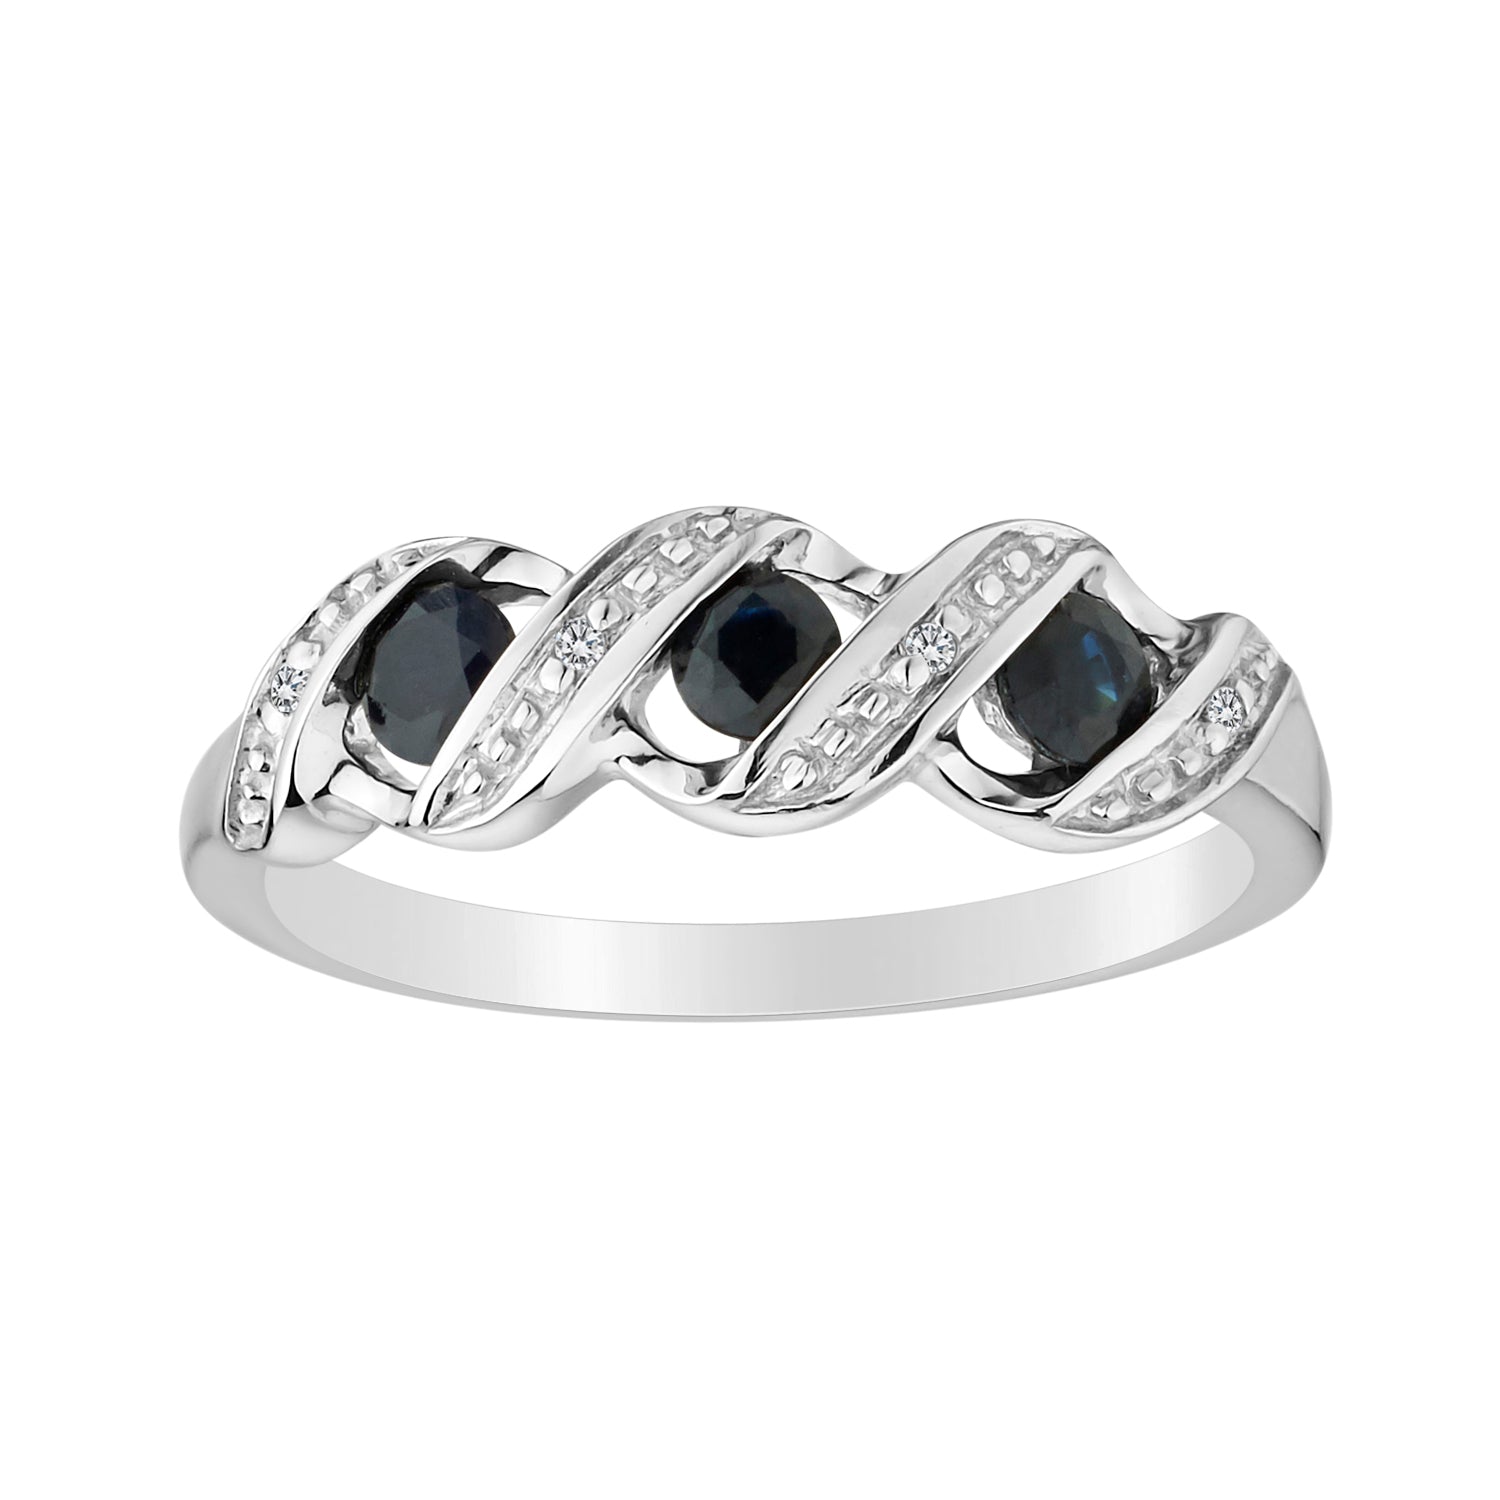 Genuine Black Sapphire Diamond Ring, Sterling Silver.................NOW